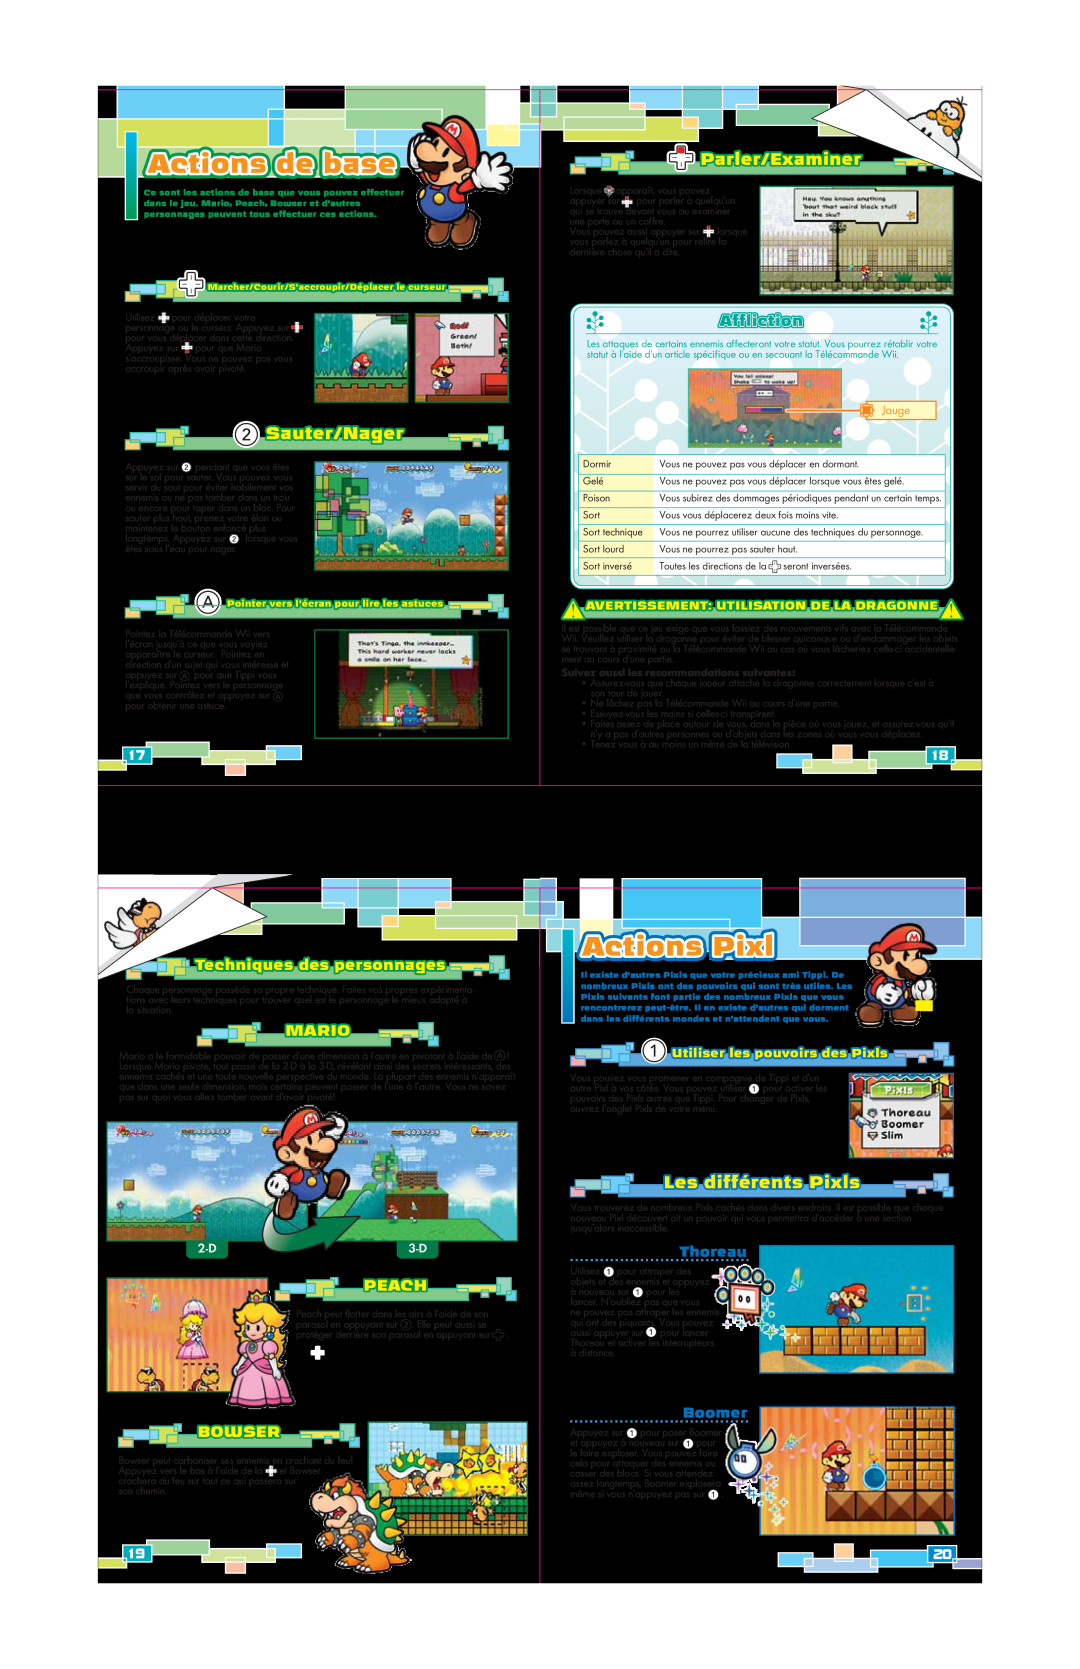 Nintendo 45496902629 Actions de base, Sauter/Nager, Les différents Pixls, Parler/Examiner, Affliction, Peach, Actions Pixl 